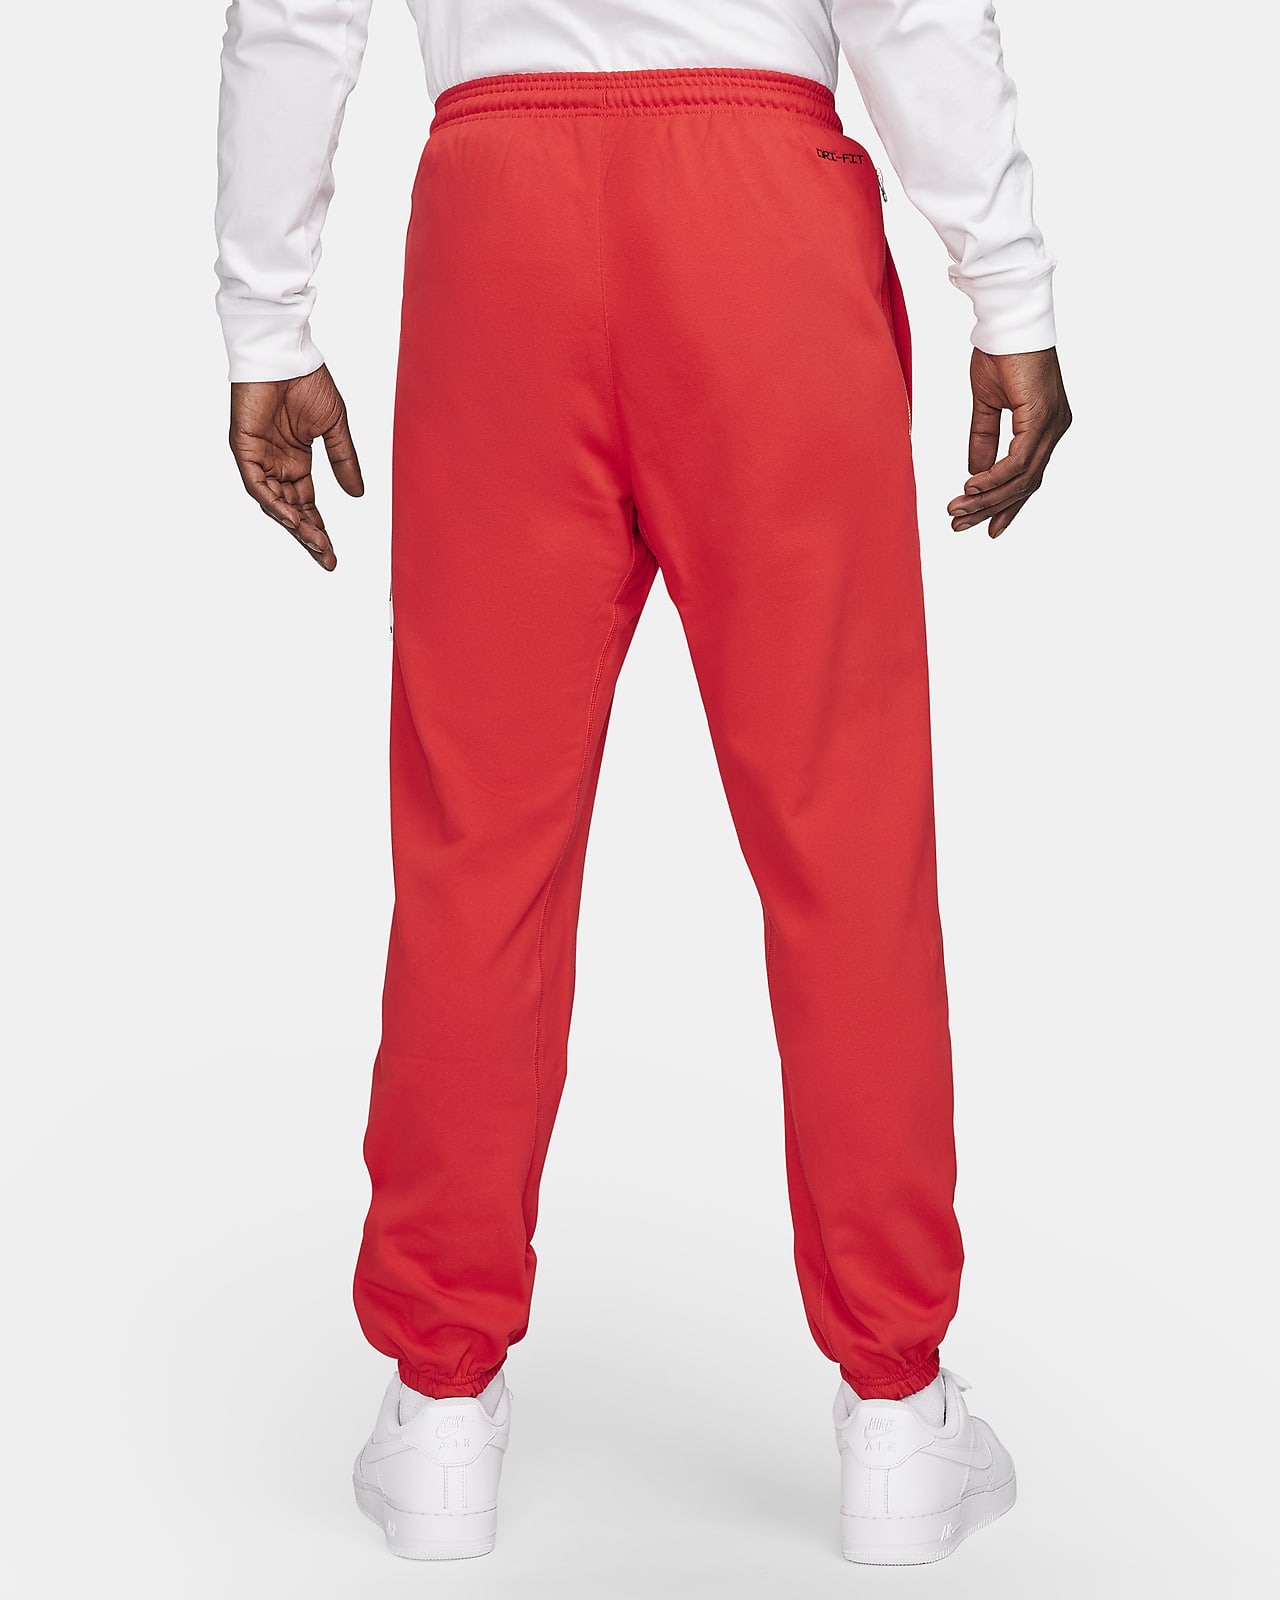 geleider bloem fictie Nike Dri-FIT Standard Issue Men's Basketball Pants. Nike.com